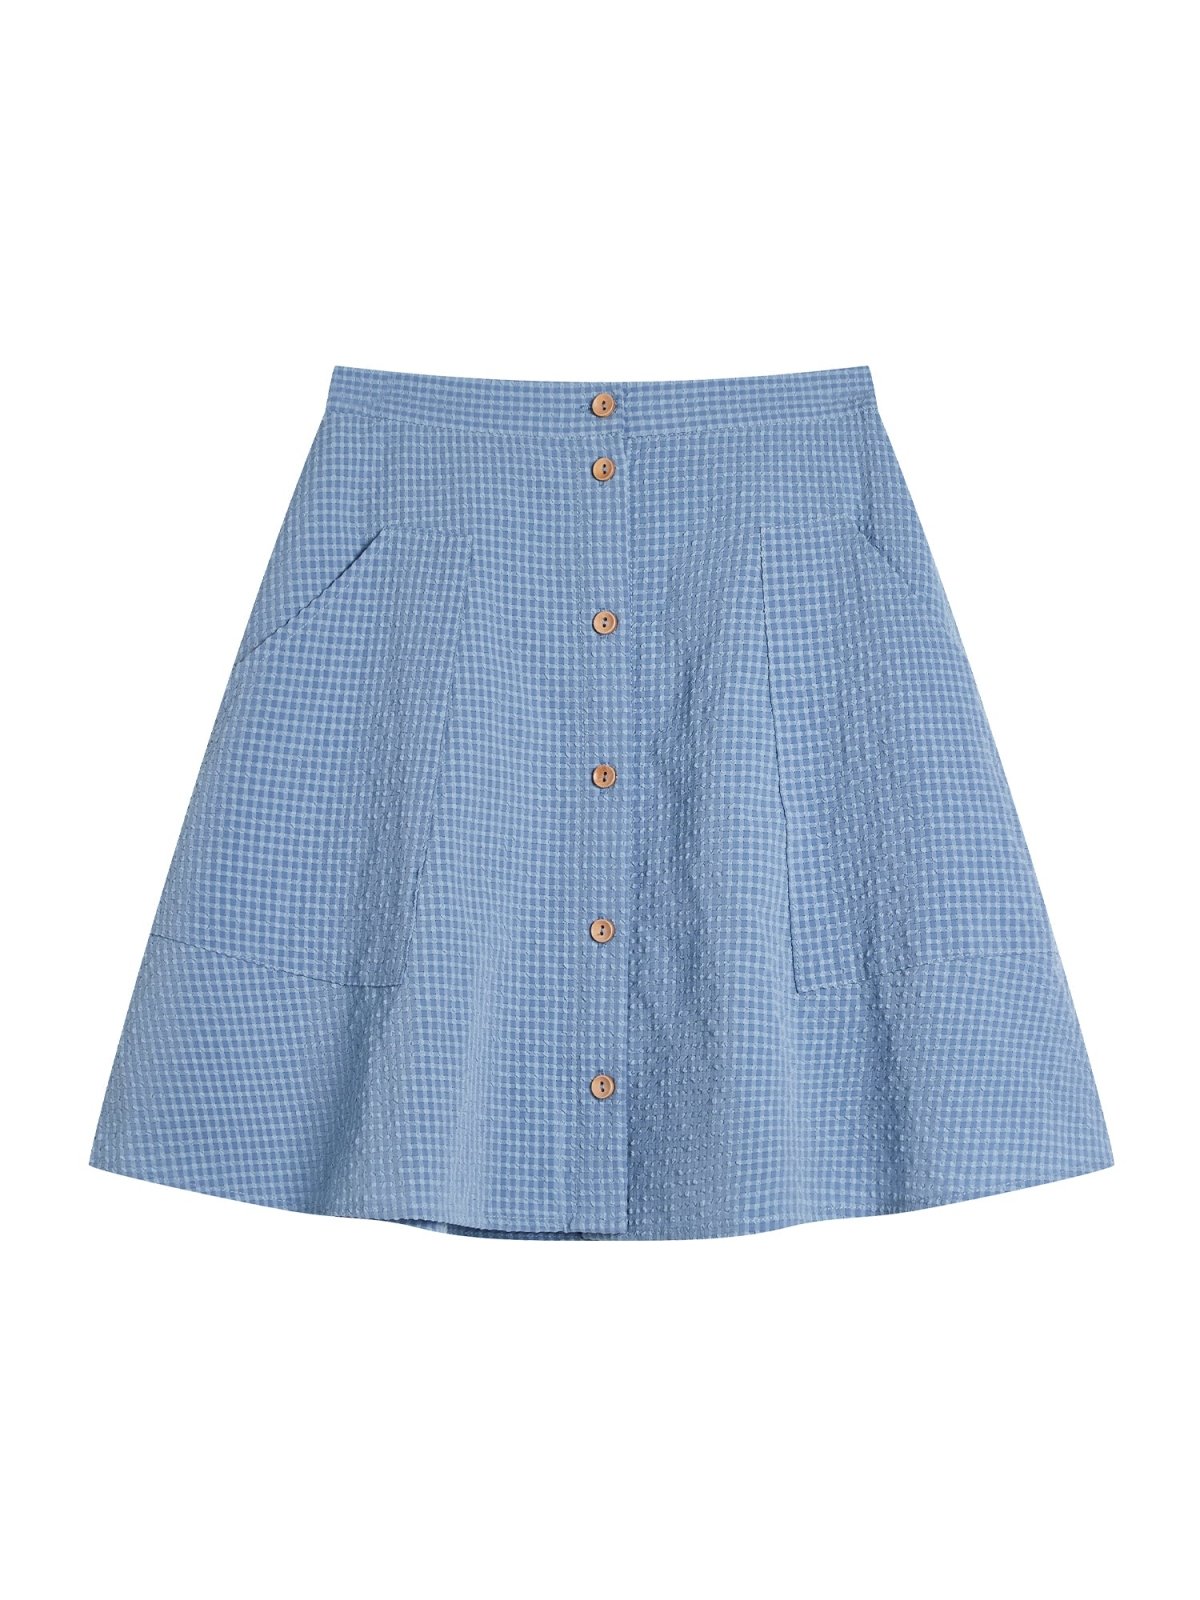 Connie Textured Checker Mini Skirt - DAG-DD9533-22BlueF - Baby Blue - F - D'ZAGE Designs